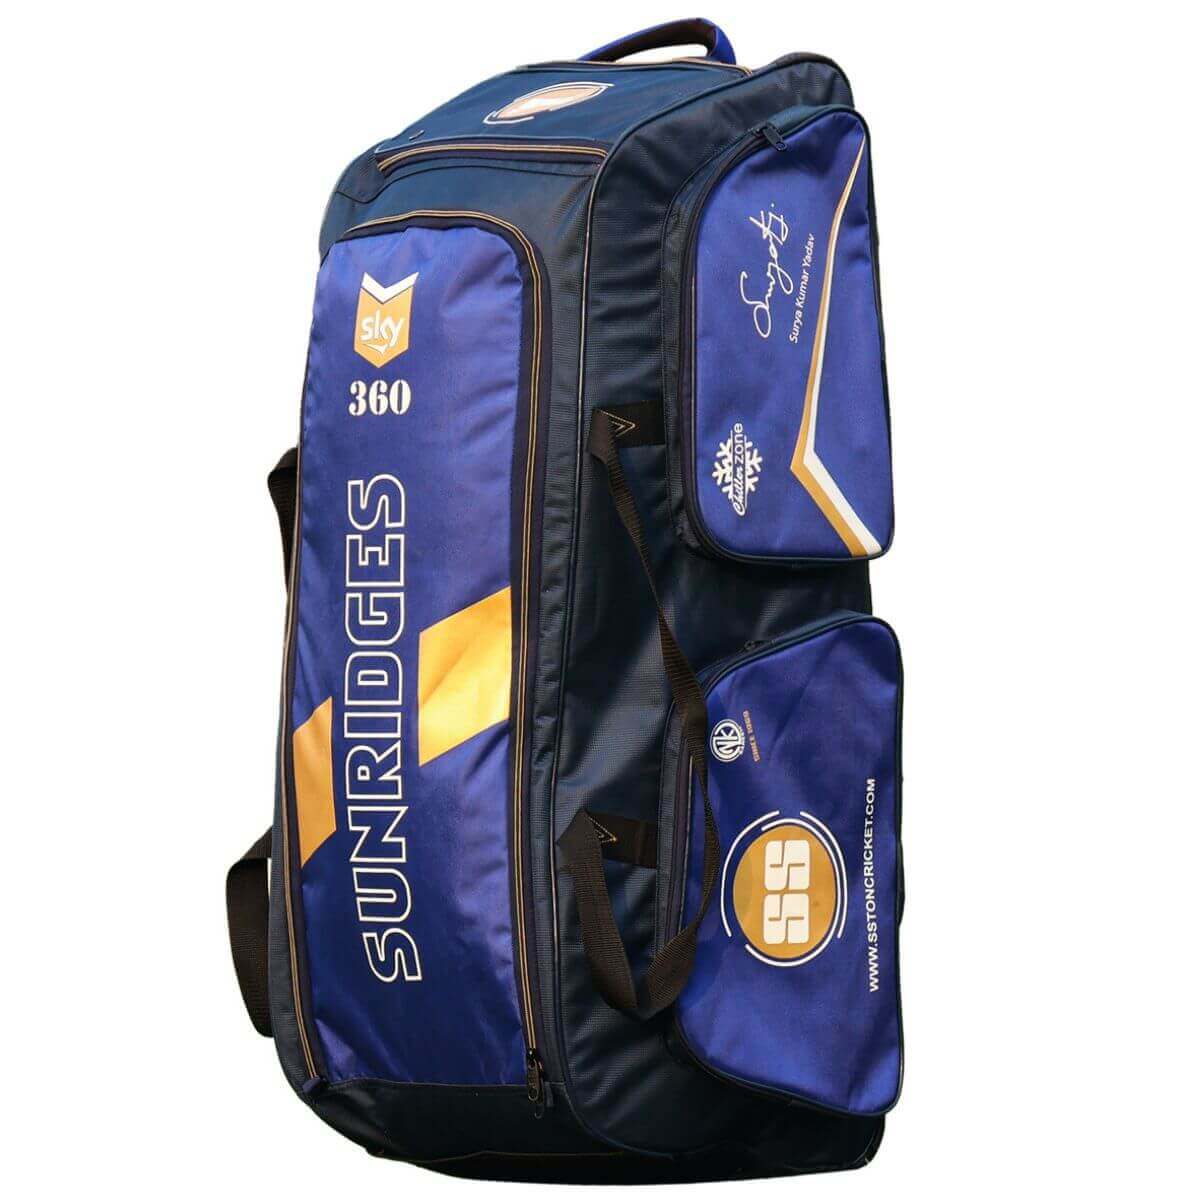 SS Limited Edition Cricket Kit Bag (wheel)